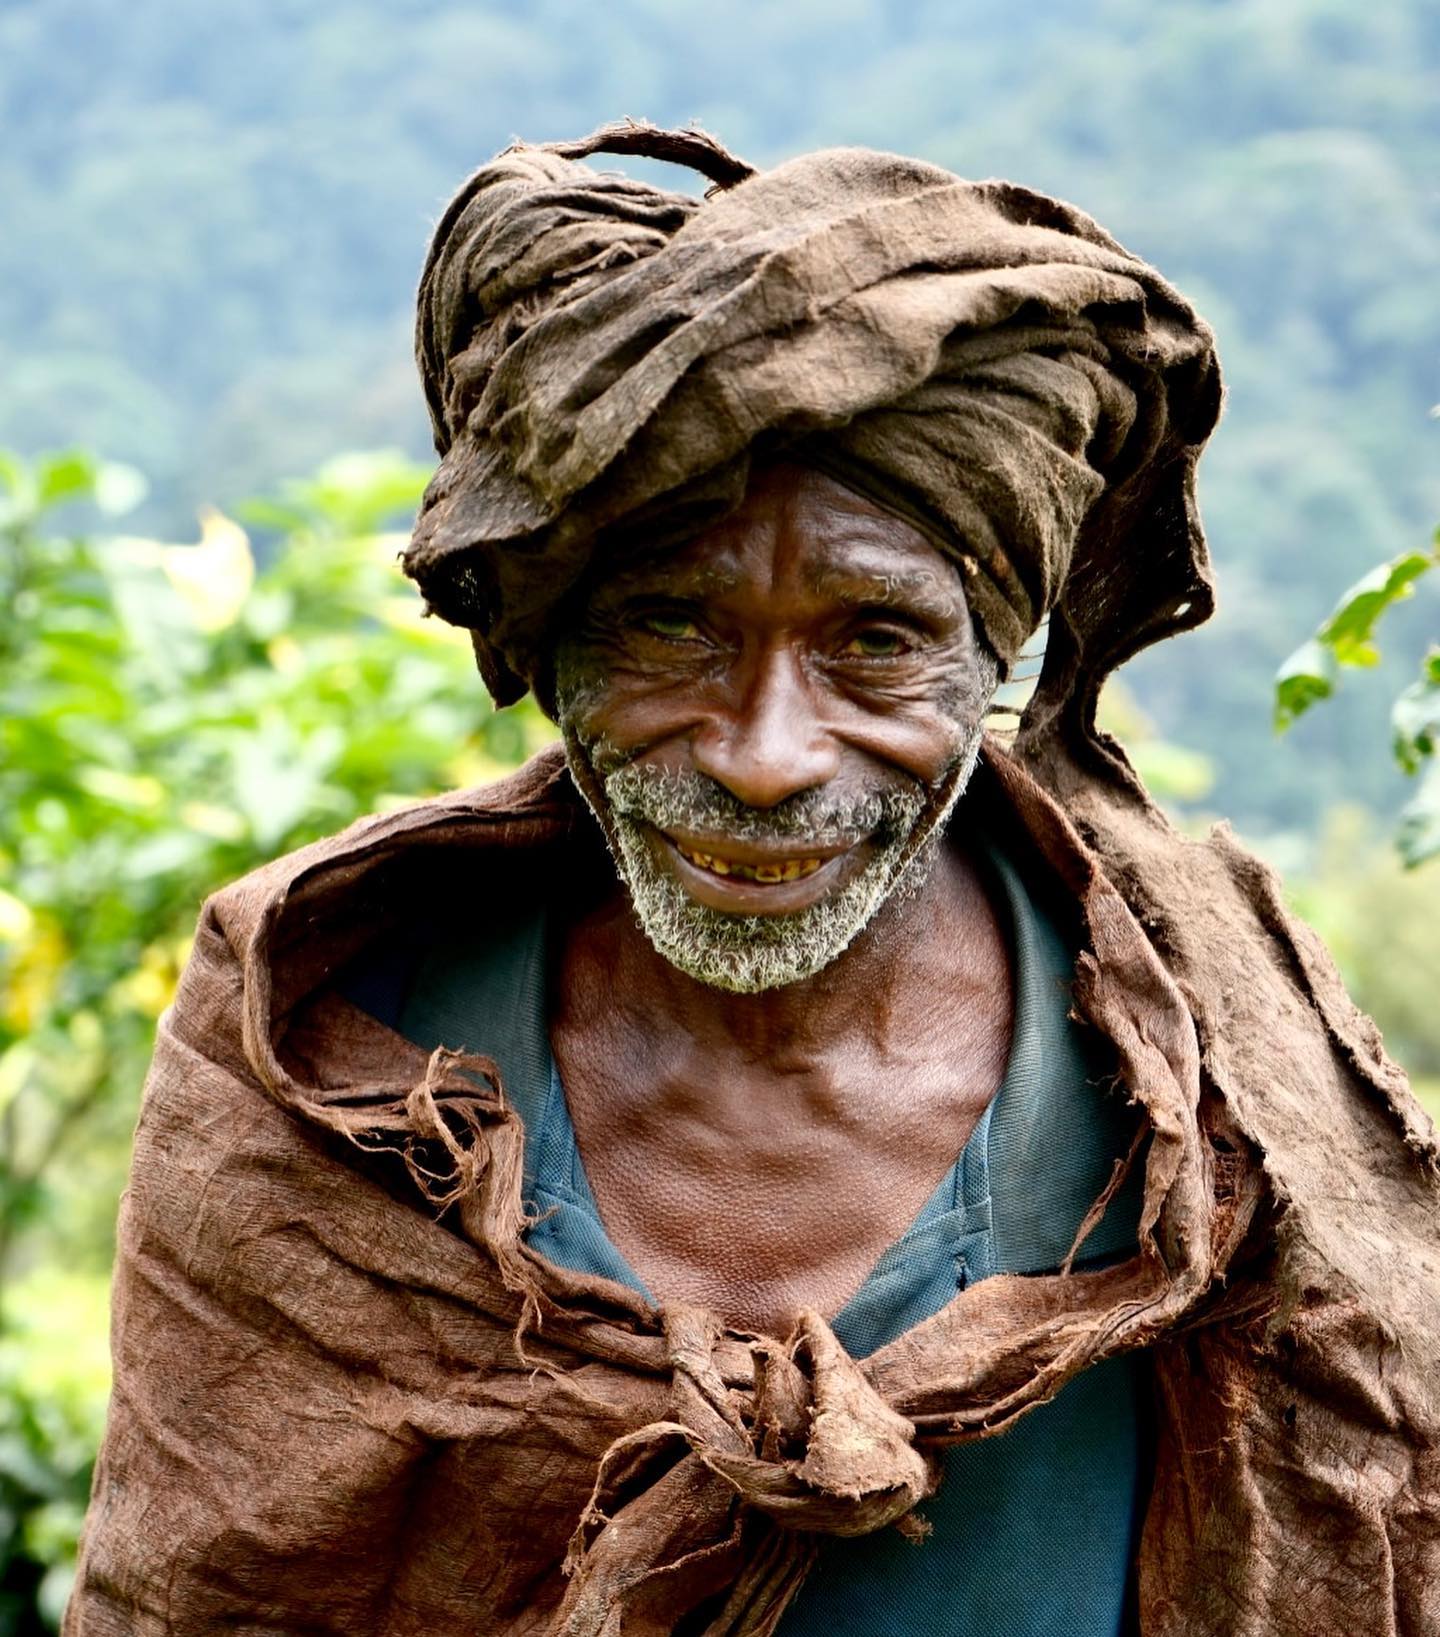 A Mutwa man - An ancient tribe of the Albertine Rift